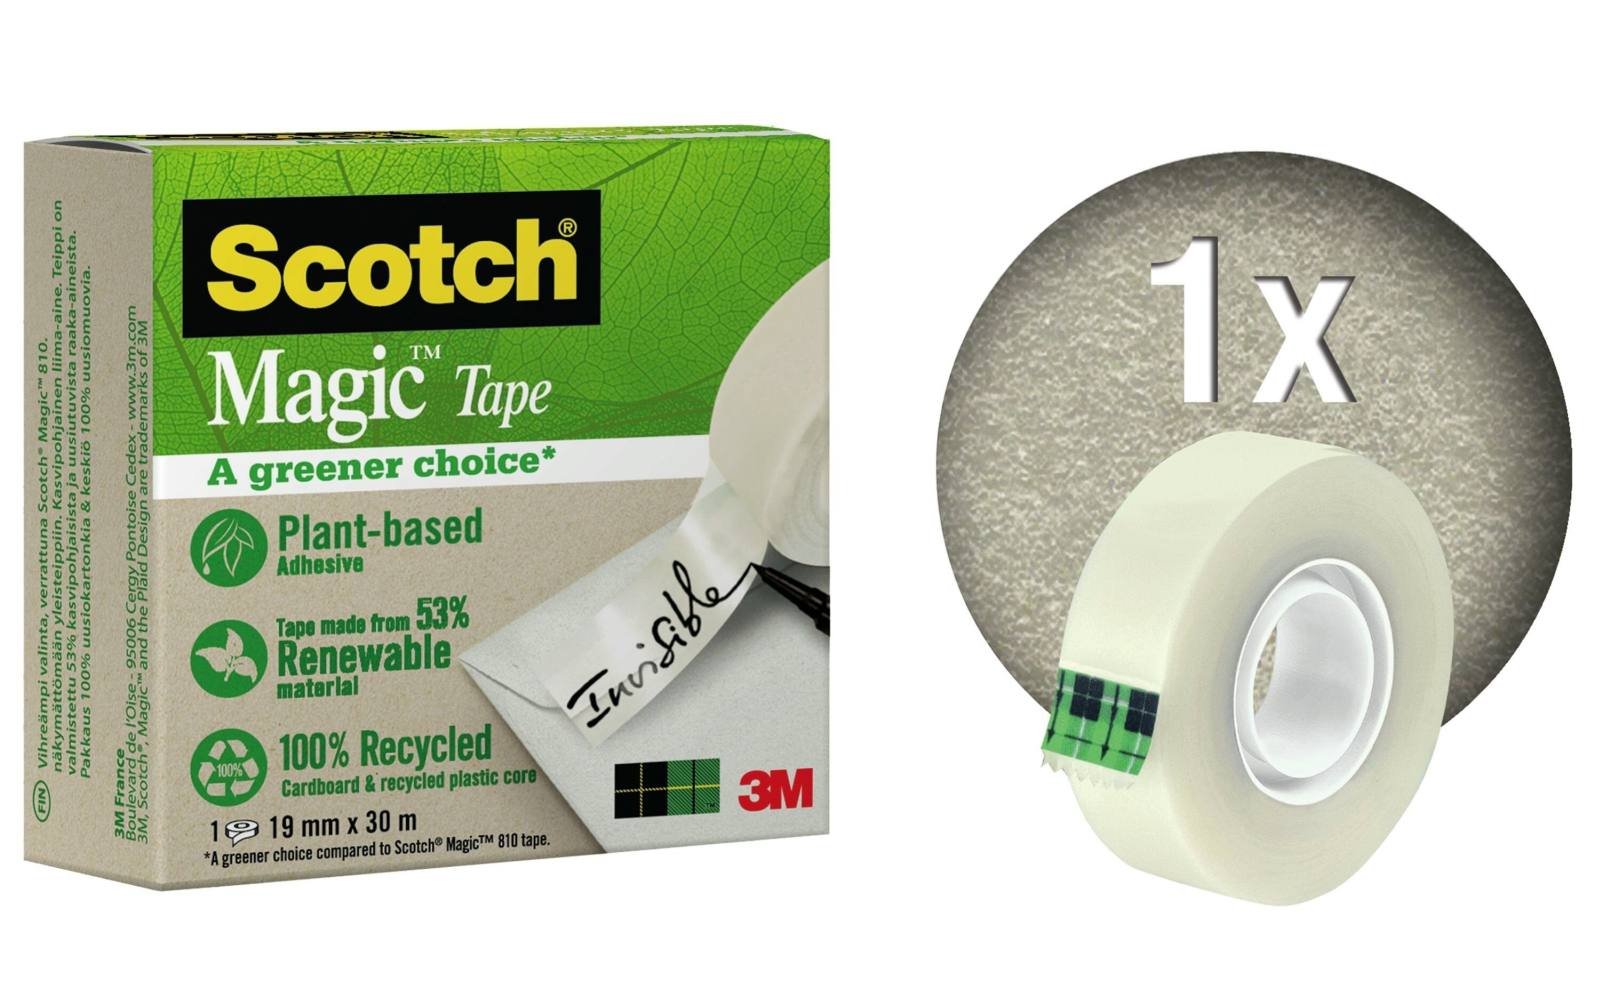 3M Scotch Magic A Greener Choice adhesive tape 1 roll 19 mm x 30 m